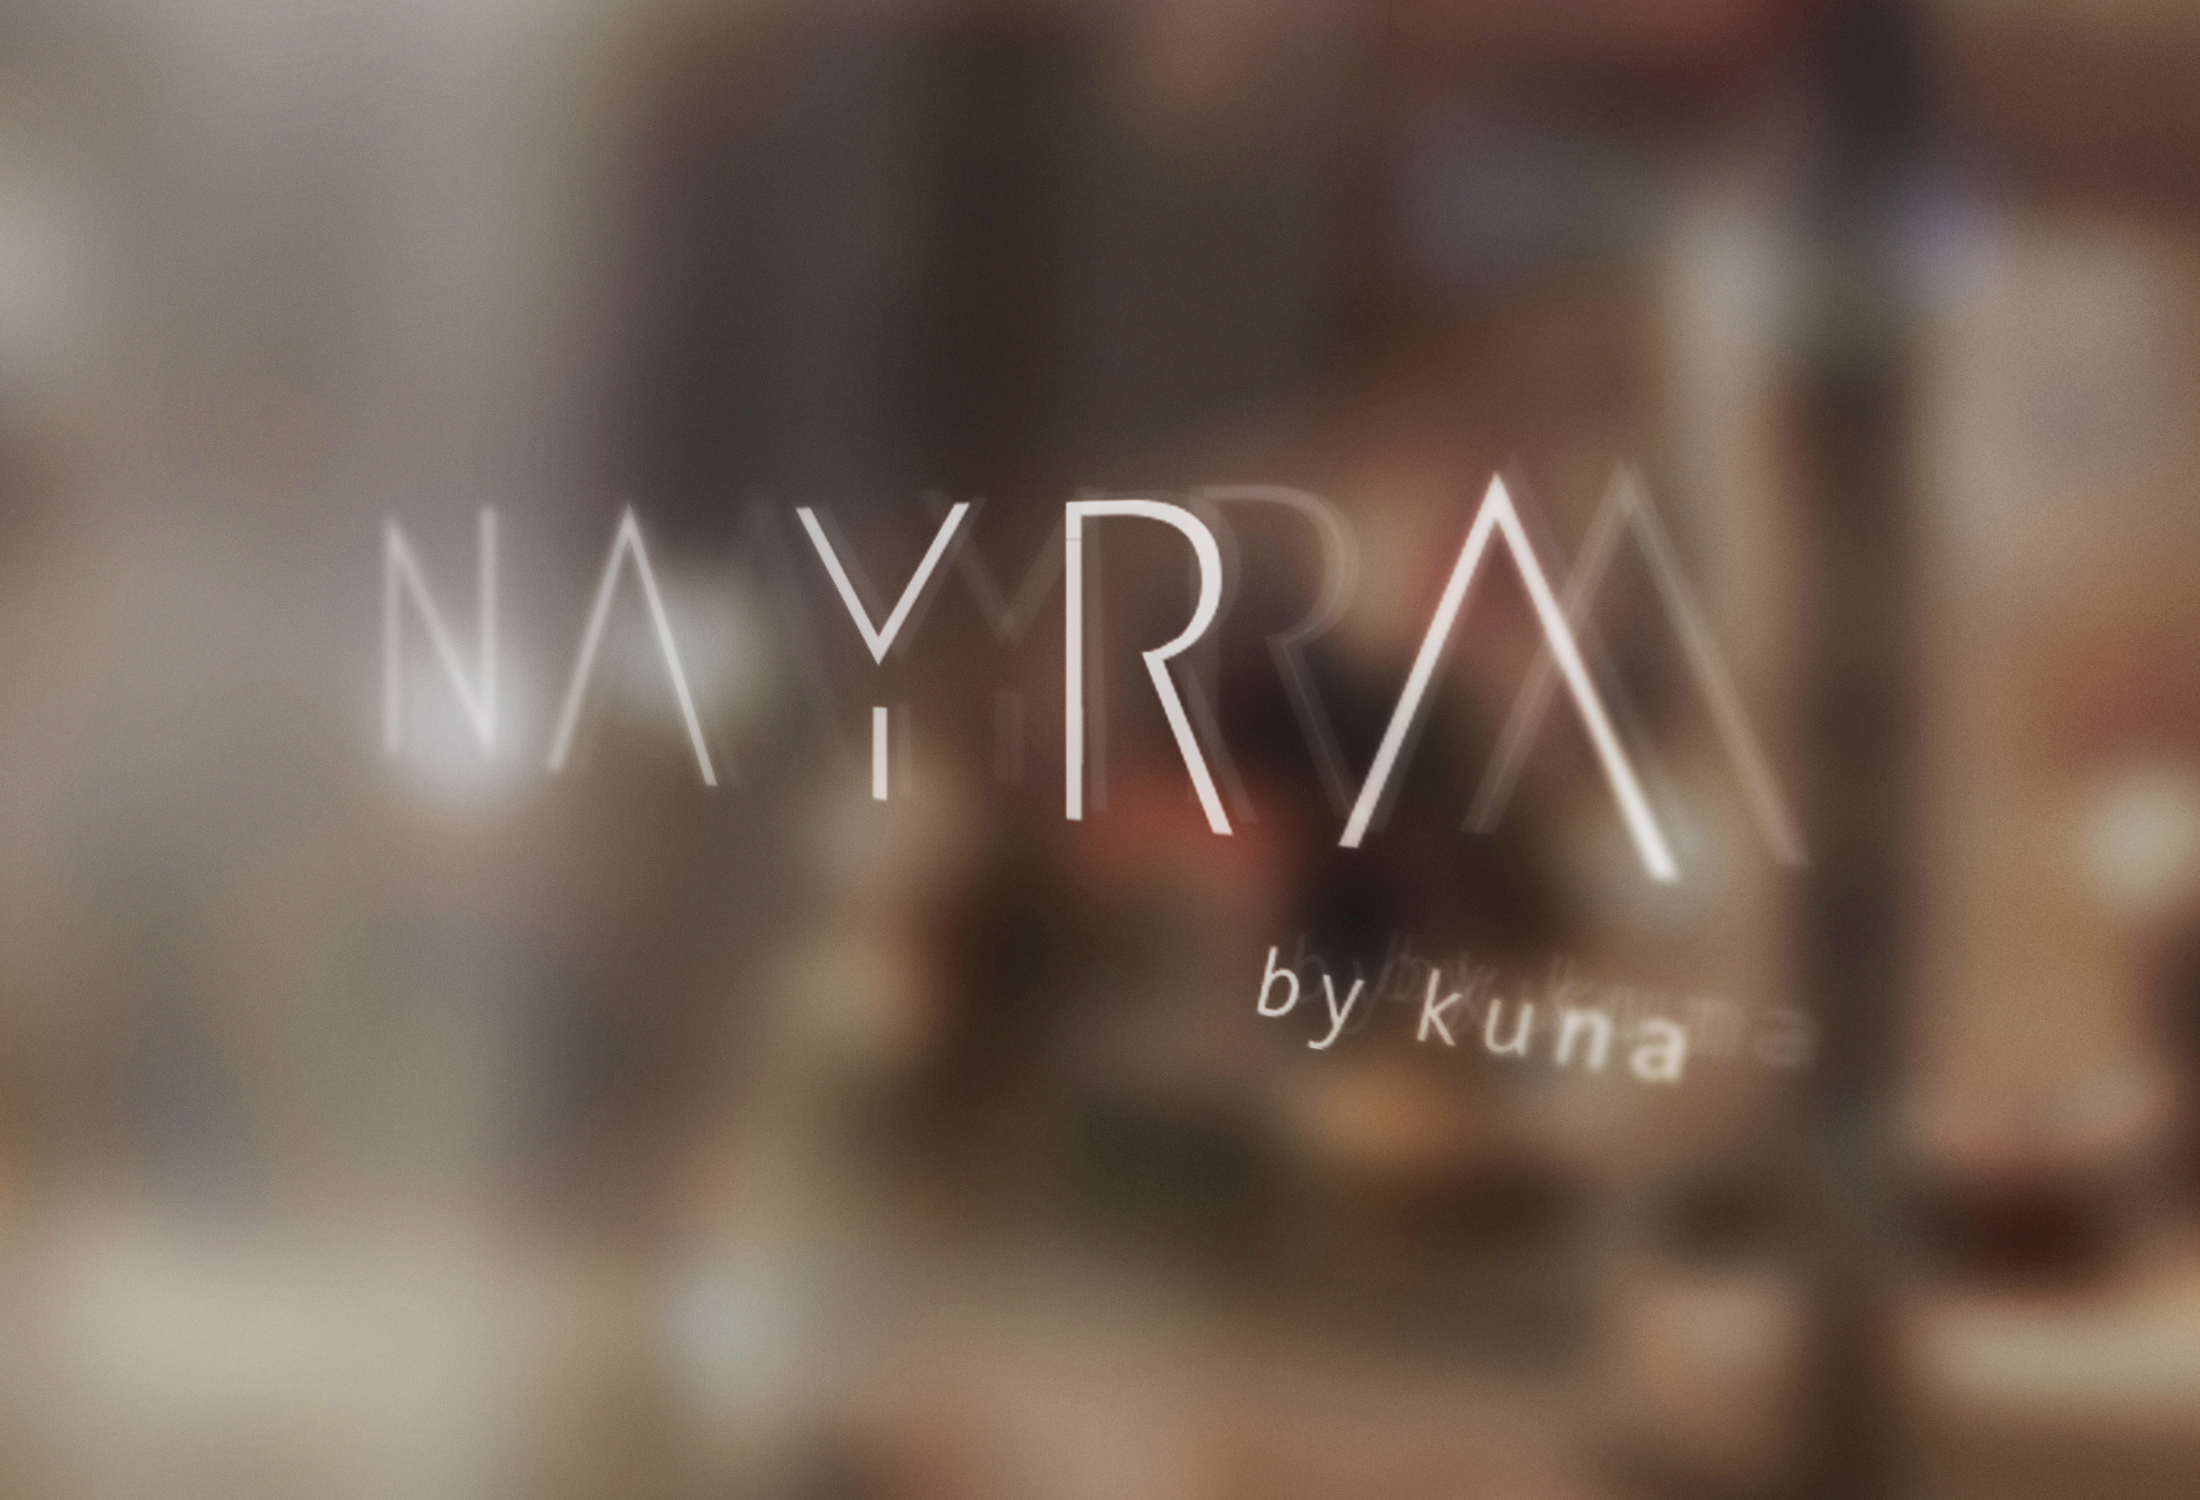 Nayra Chela on Behance